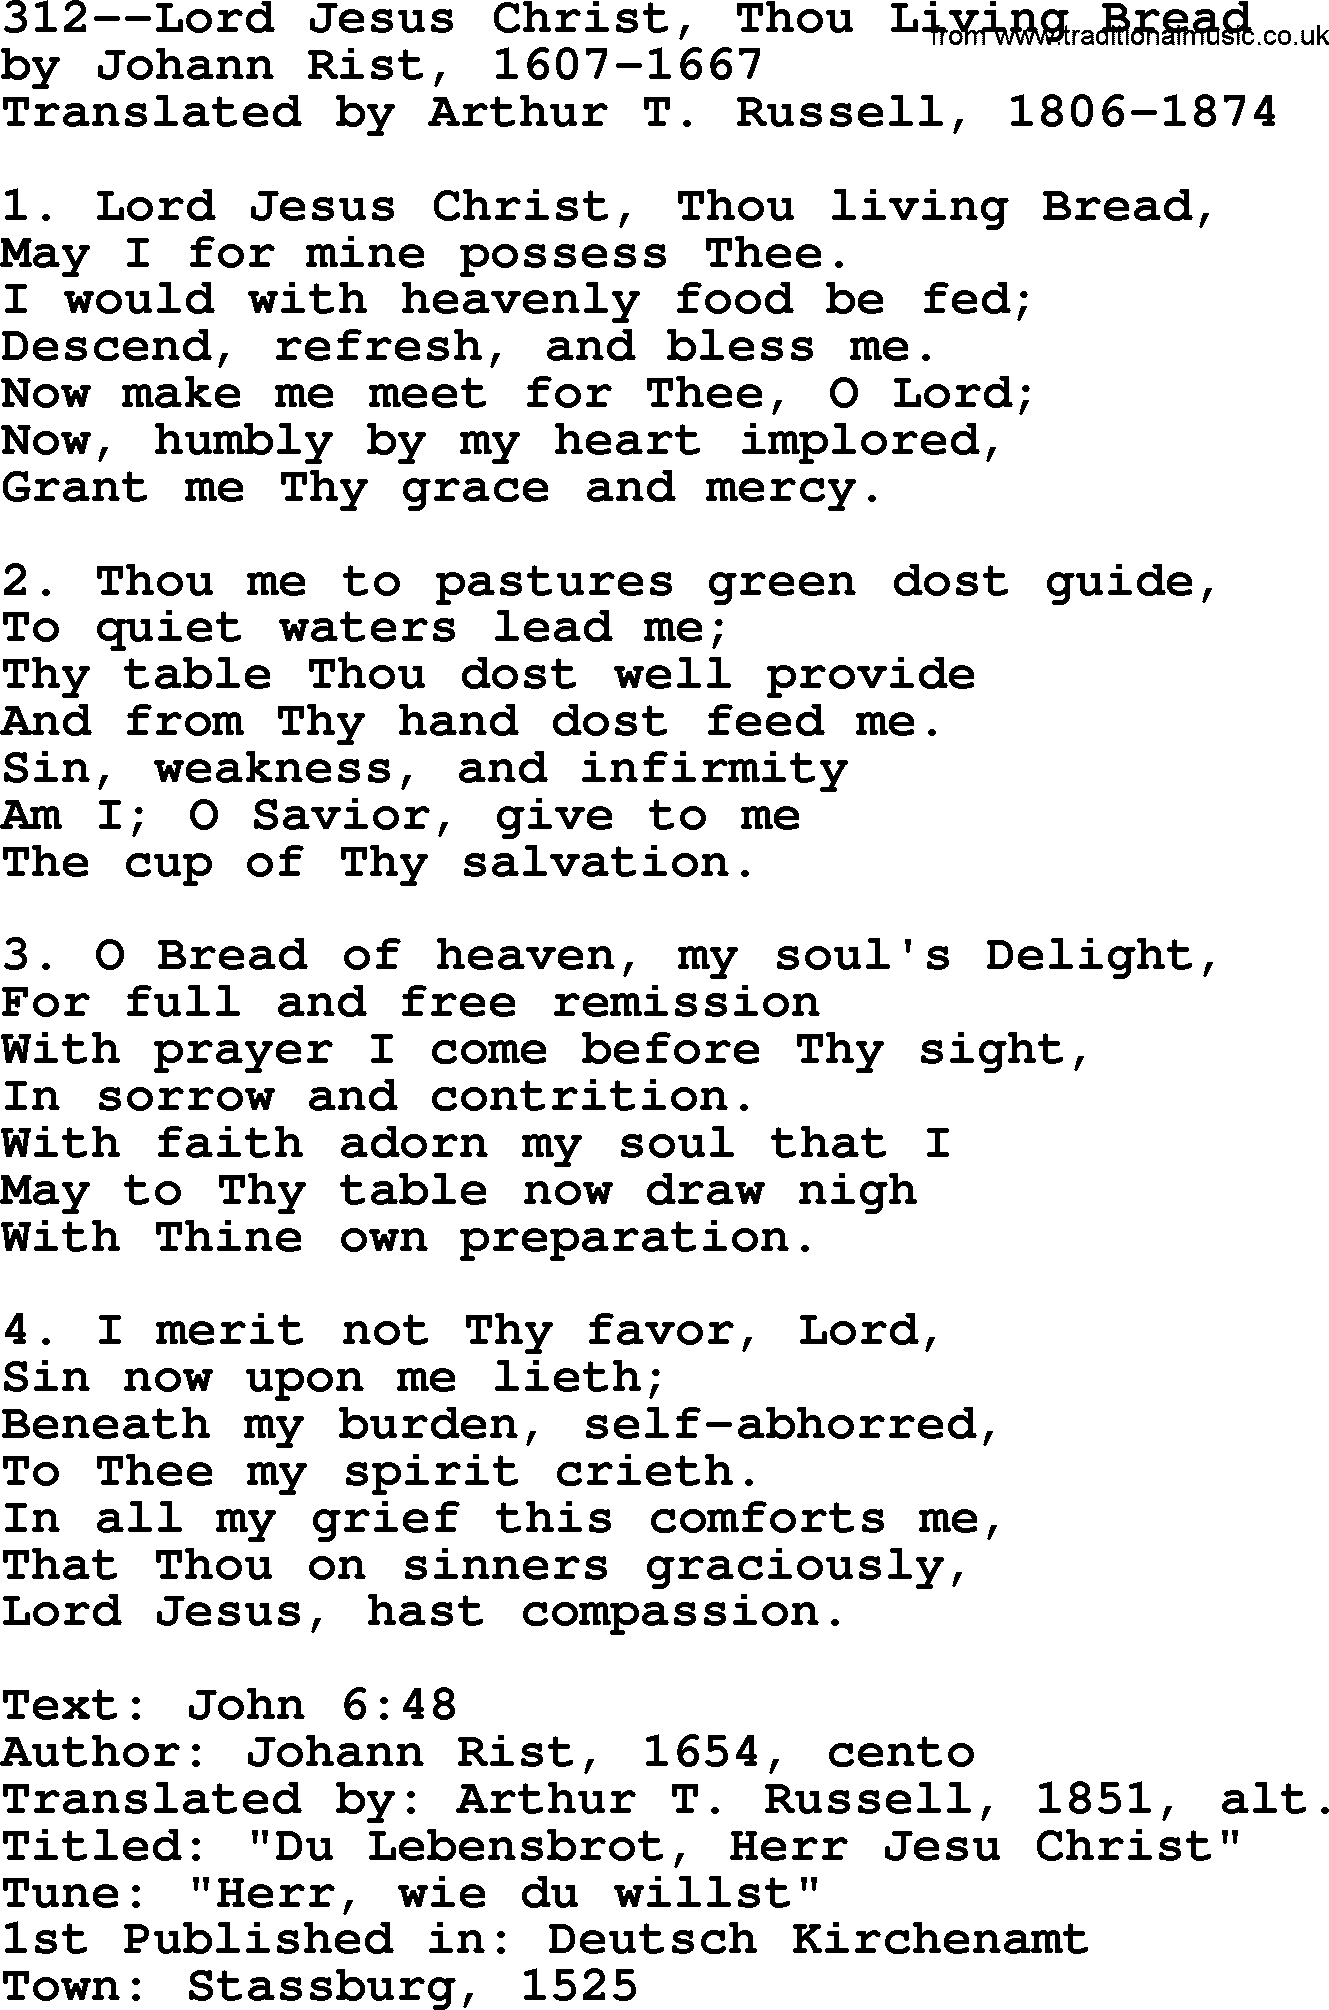 Lutheran Hymn: 312--Lord Jesus Christ, Thou Living Bread.txt lyrics with PDF